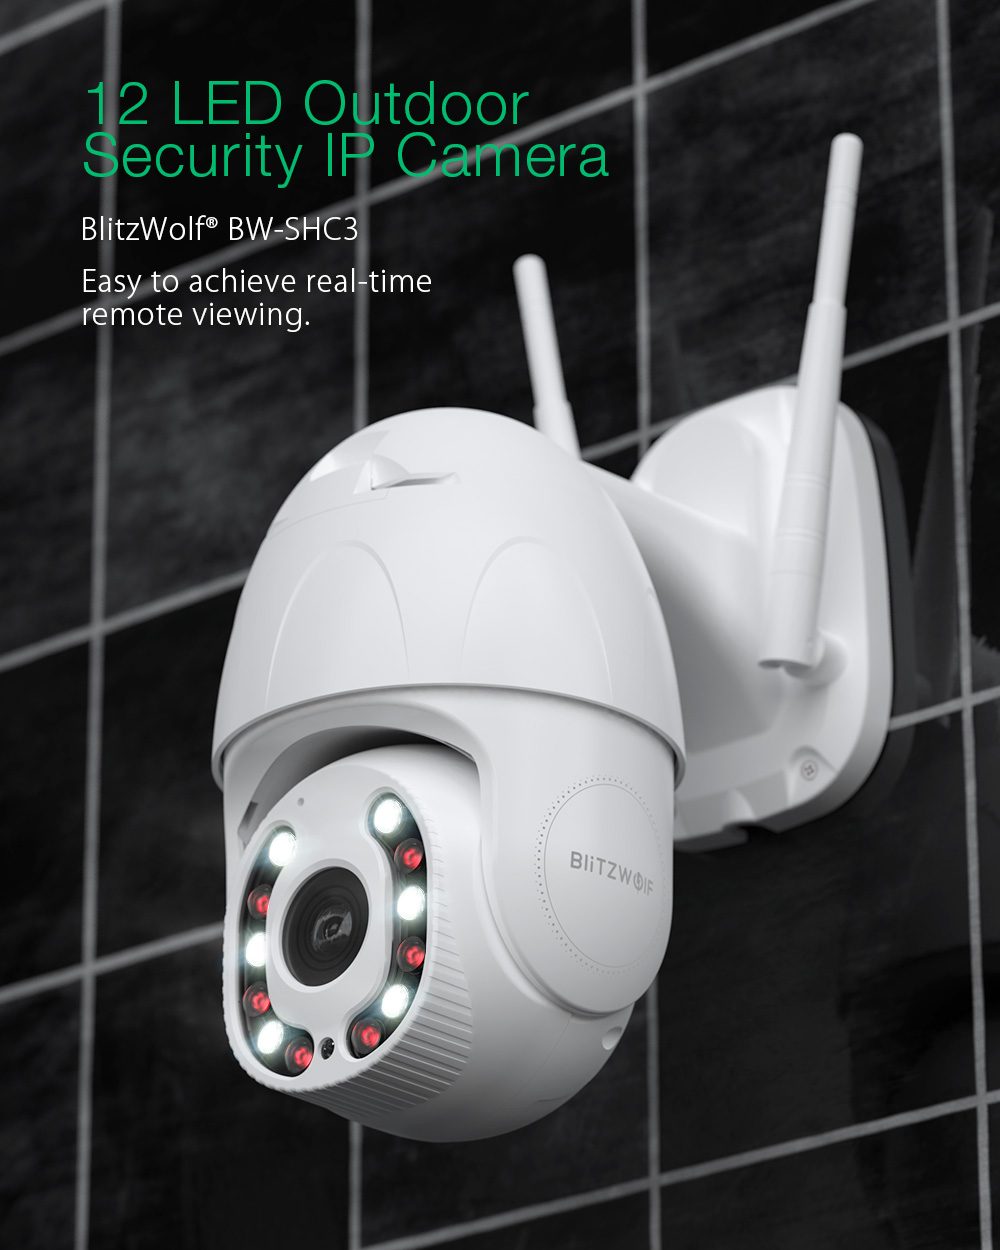 Blitzwolf BW-SHC3 Security IP camera